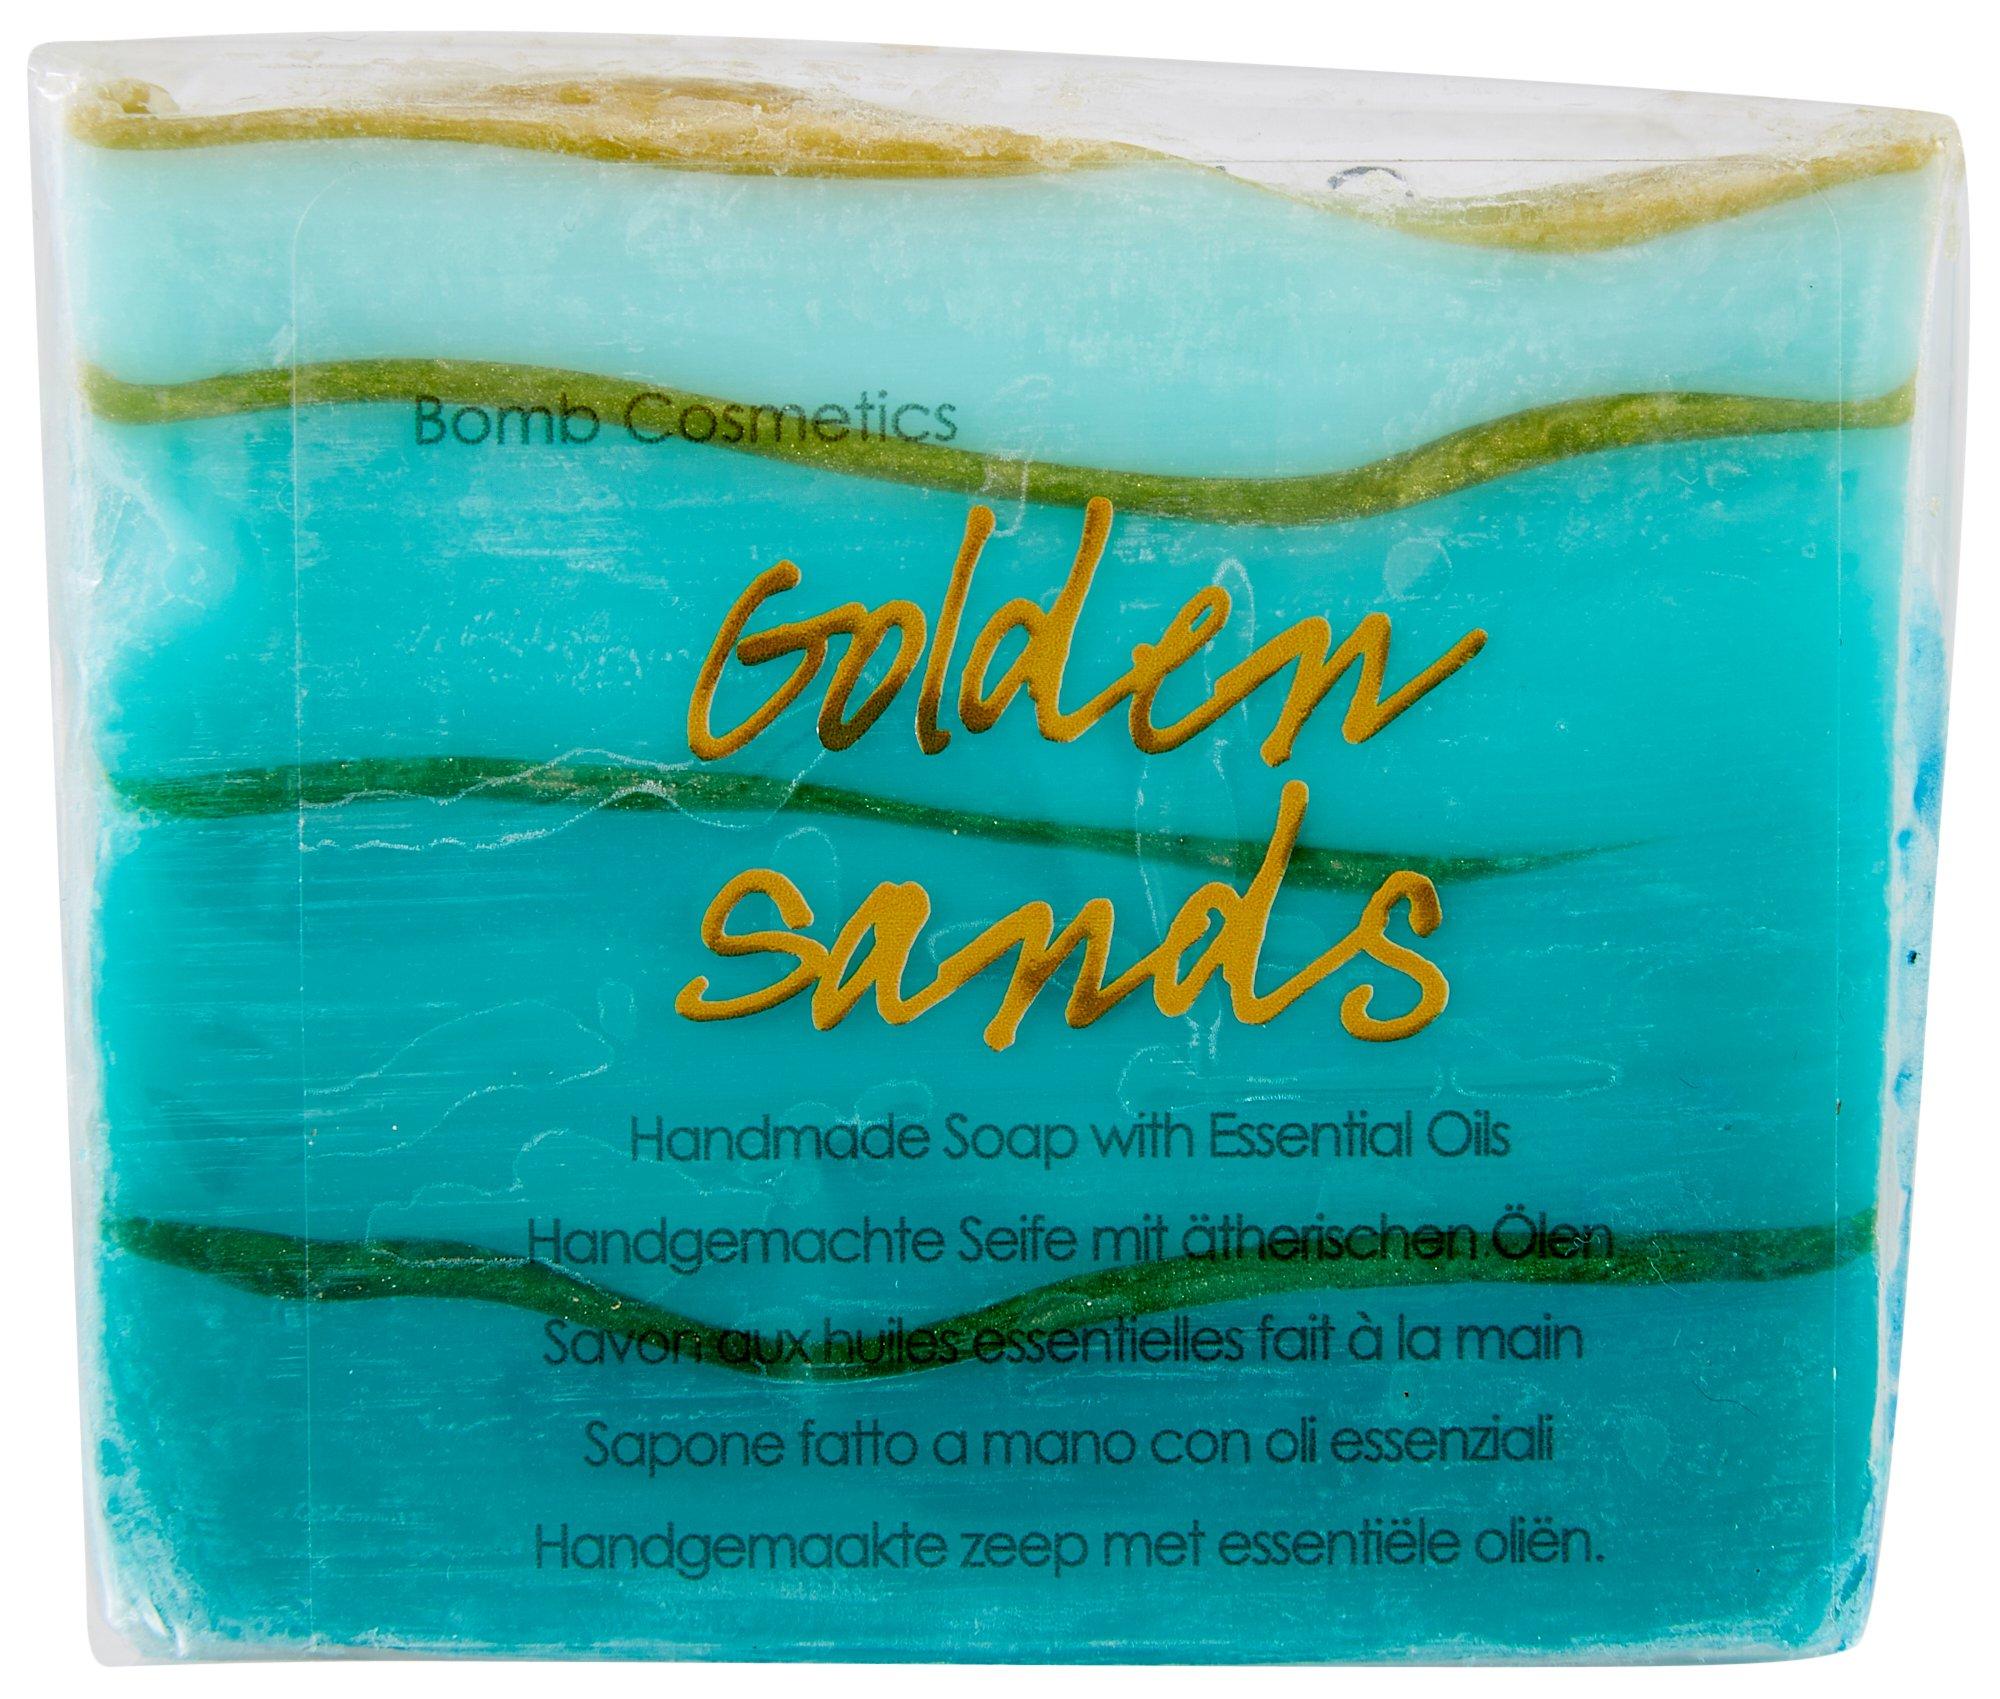 Bomb Cosmetics Golden Sands Handmade Soap 3.5 oz.